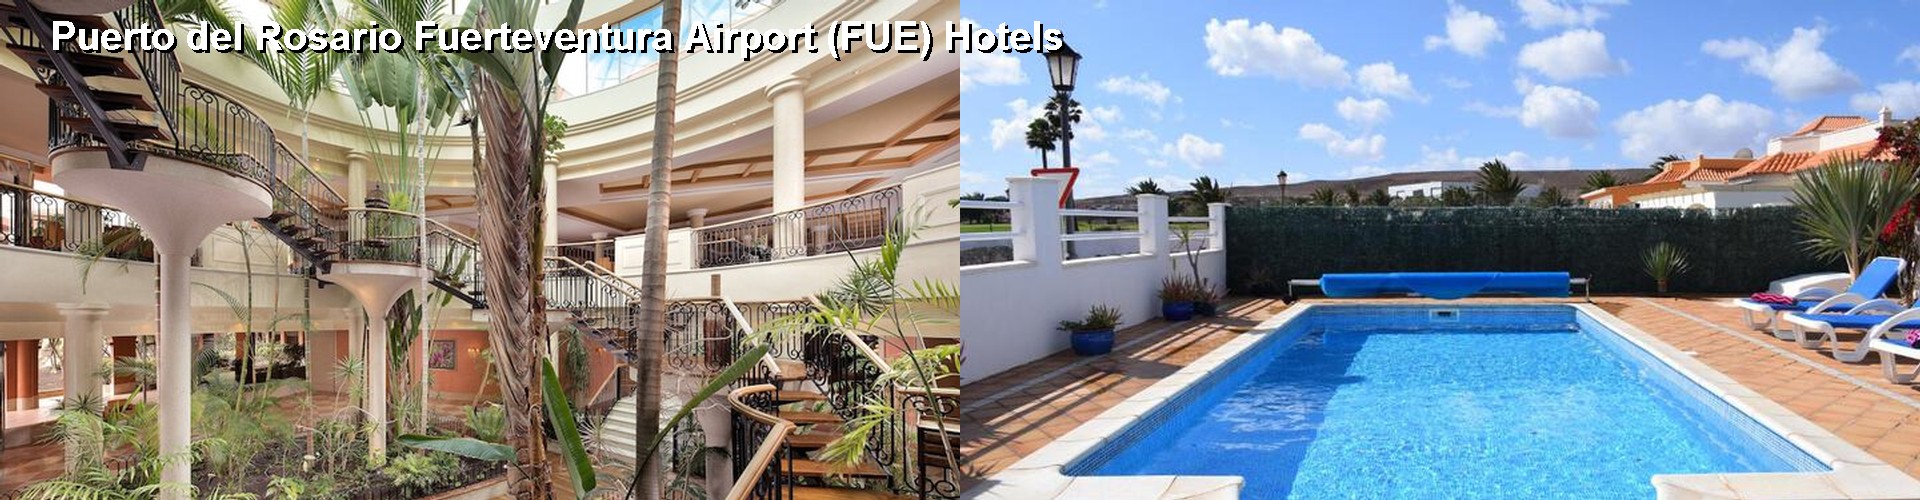 5 Best Hotels near Puerto del Rosario Fuerteventura Airport (FUE)